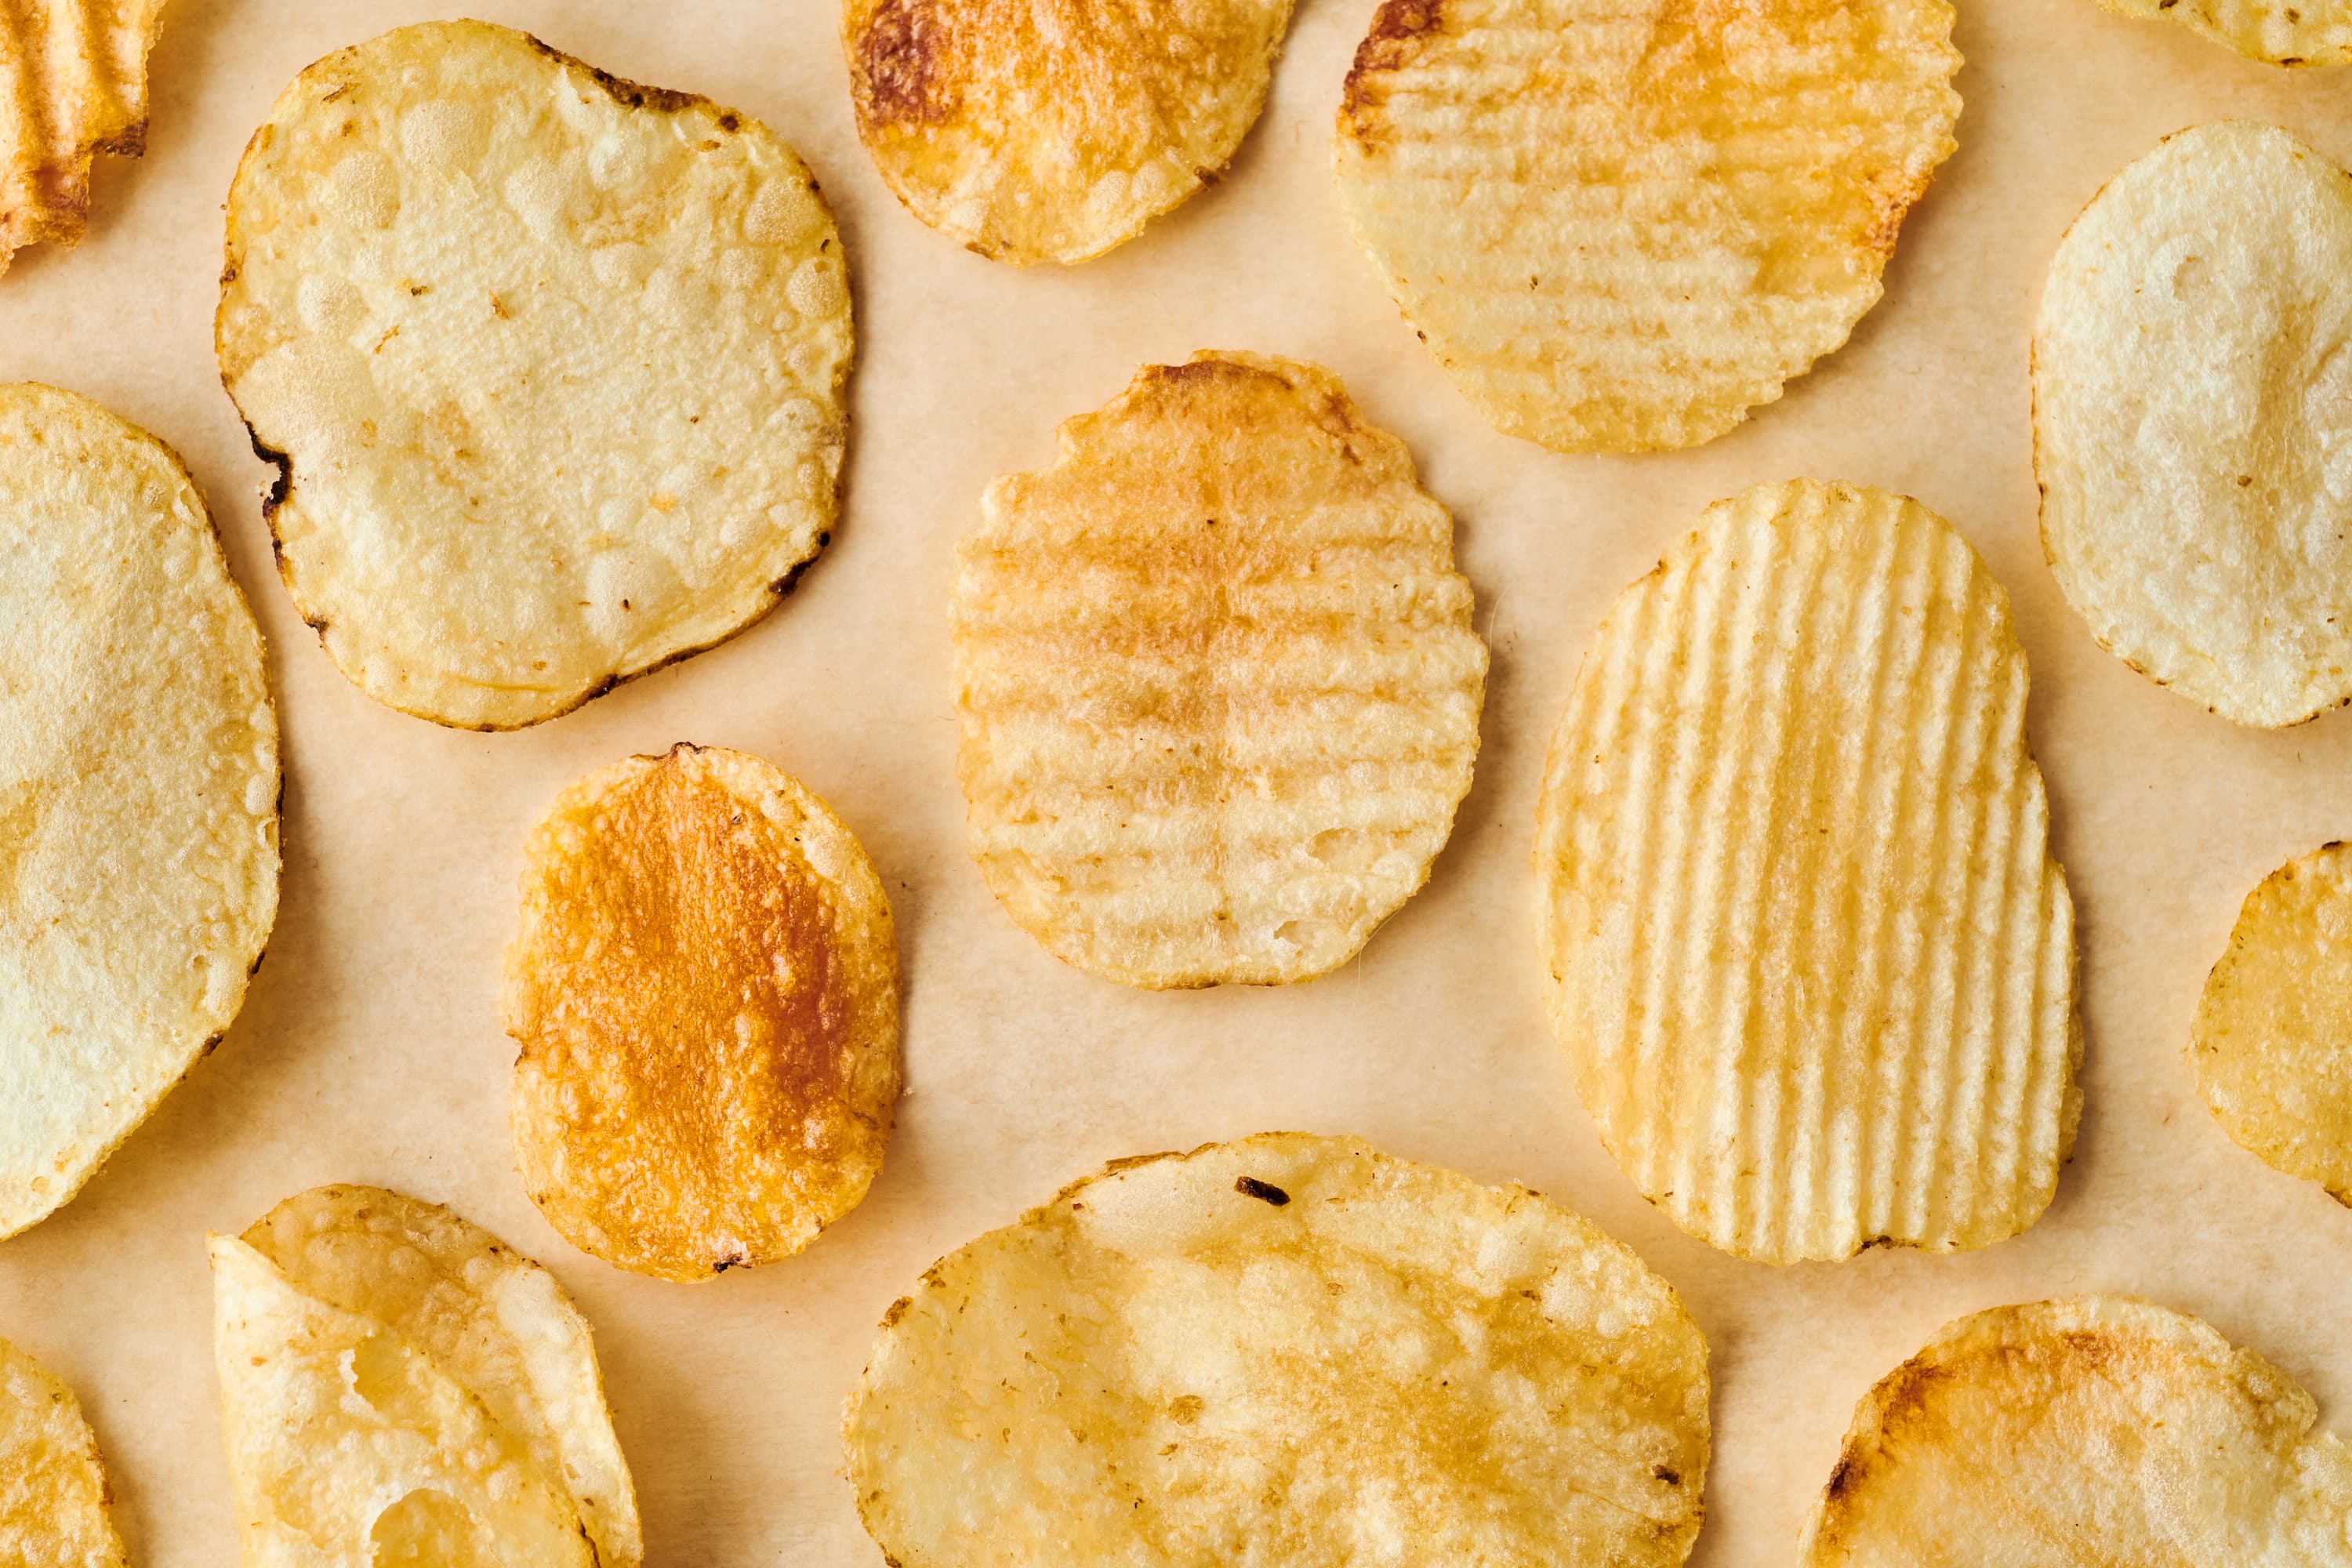  Lay's® Oven Baked Original Potato Crisps Gluten Free